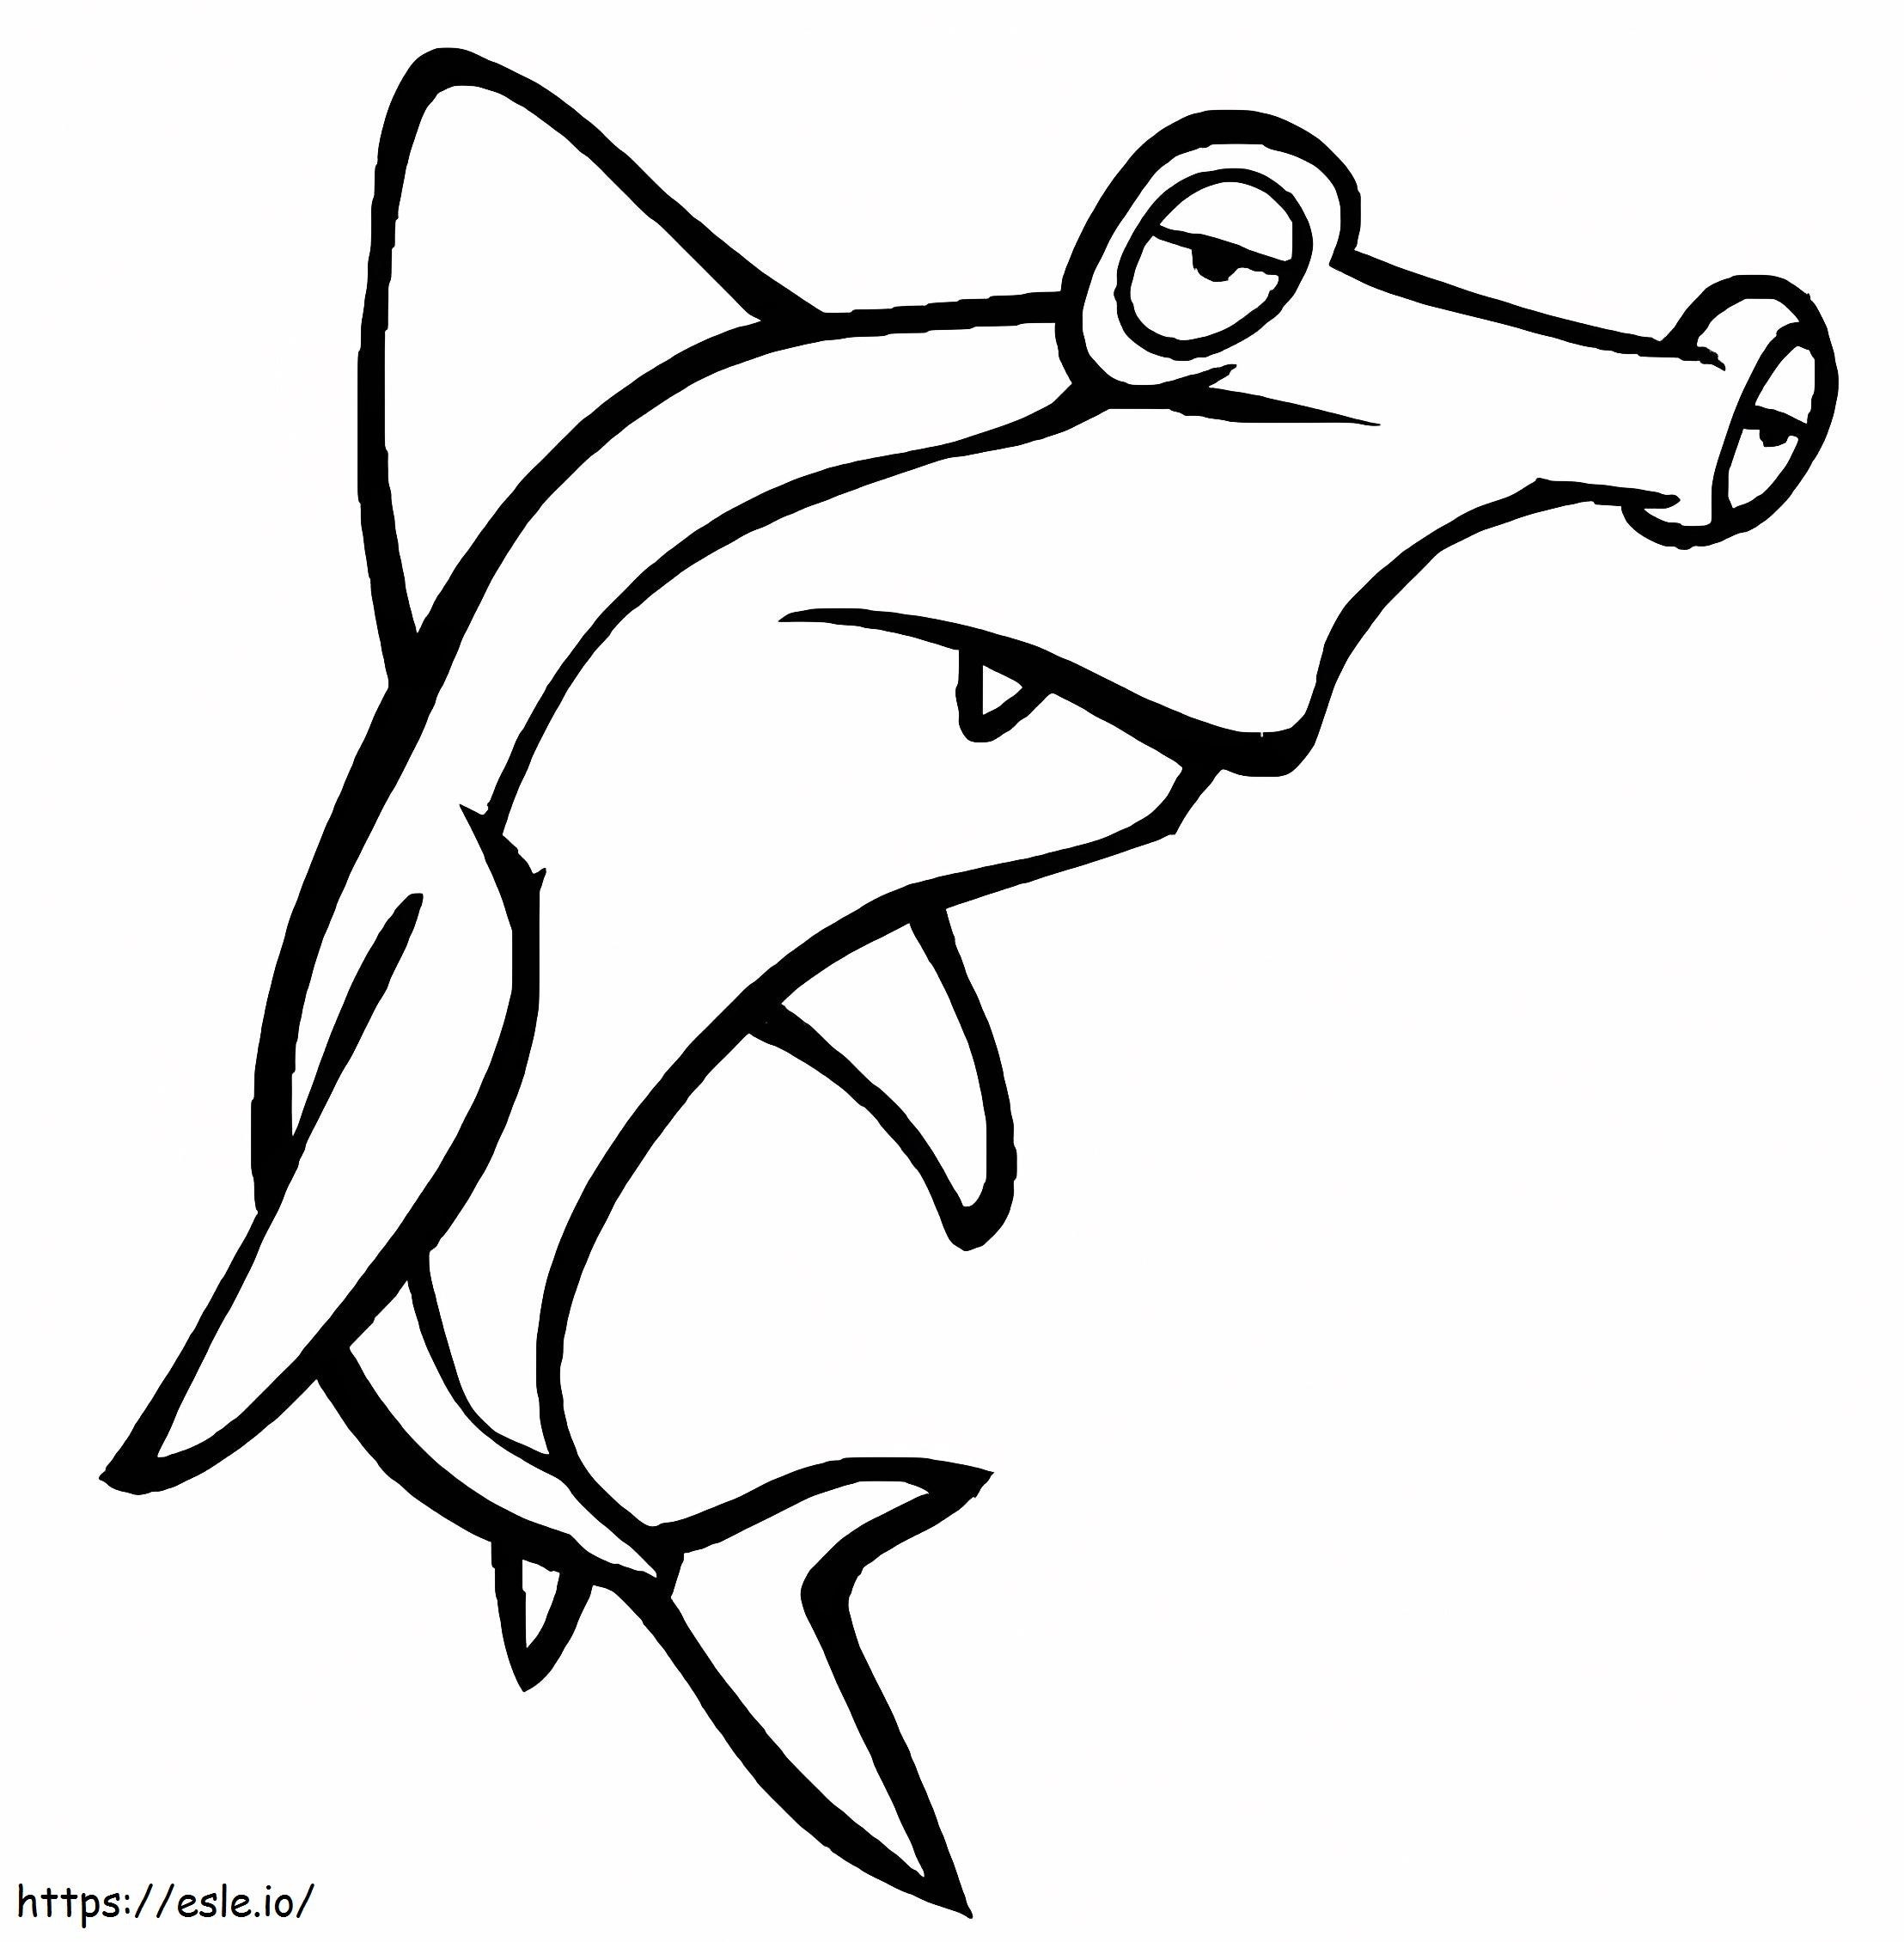 Coloriage Dessin de requin marteau à imprimer dessin